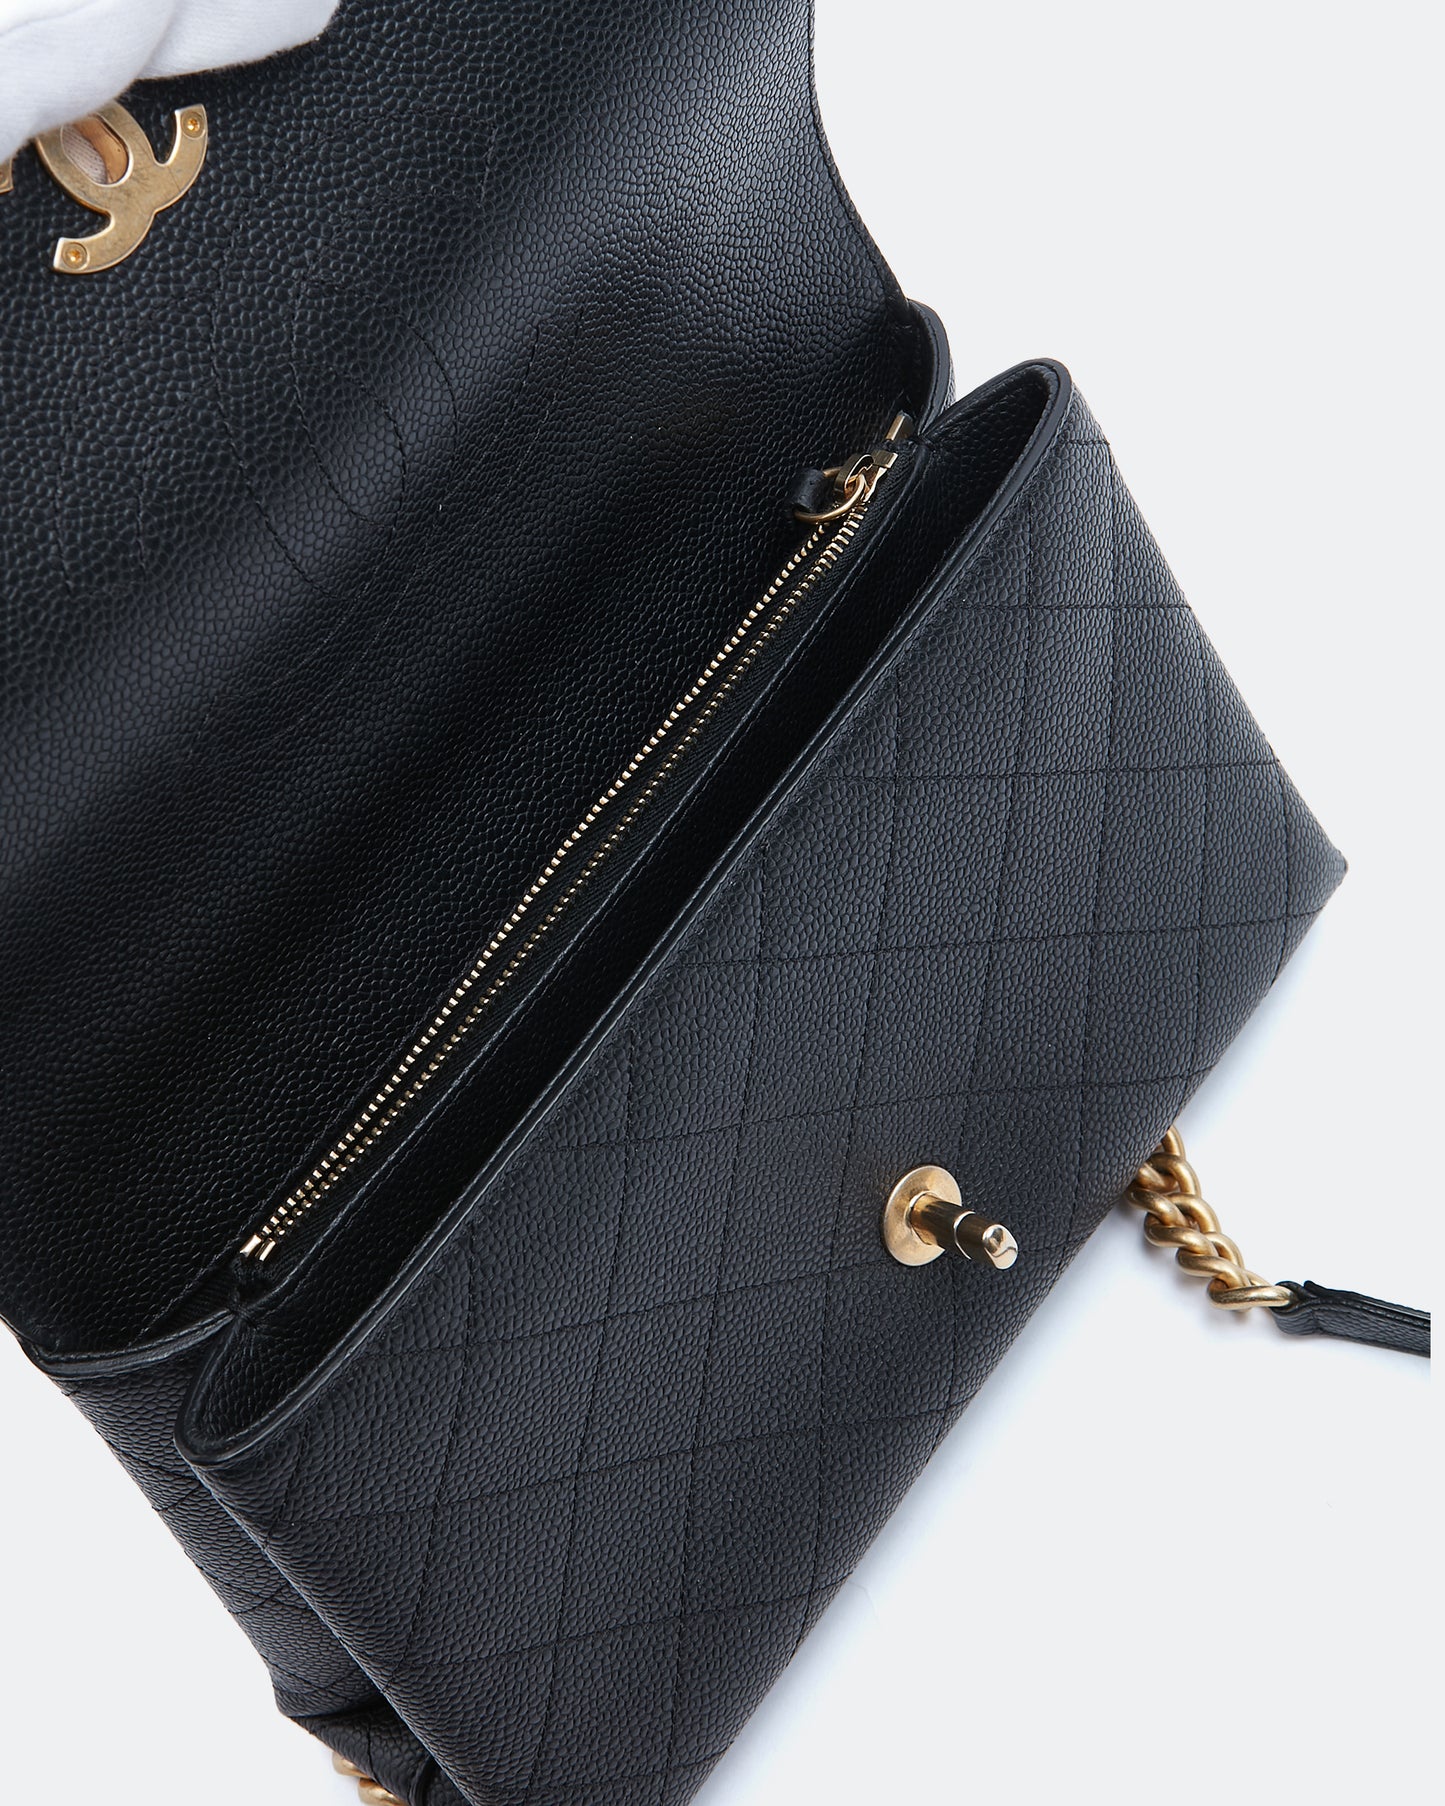 Chanel Black Caviar Chic Medium Top Handle Bag